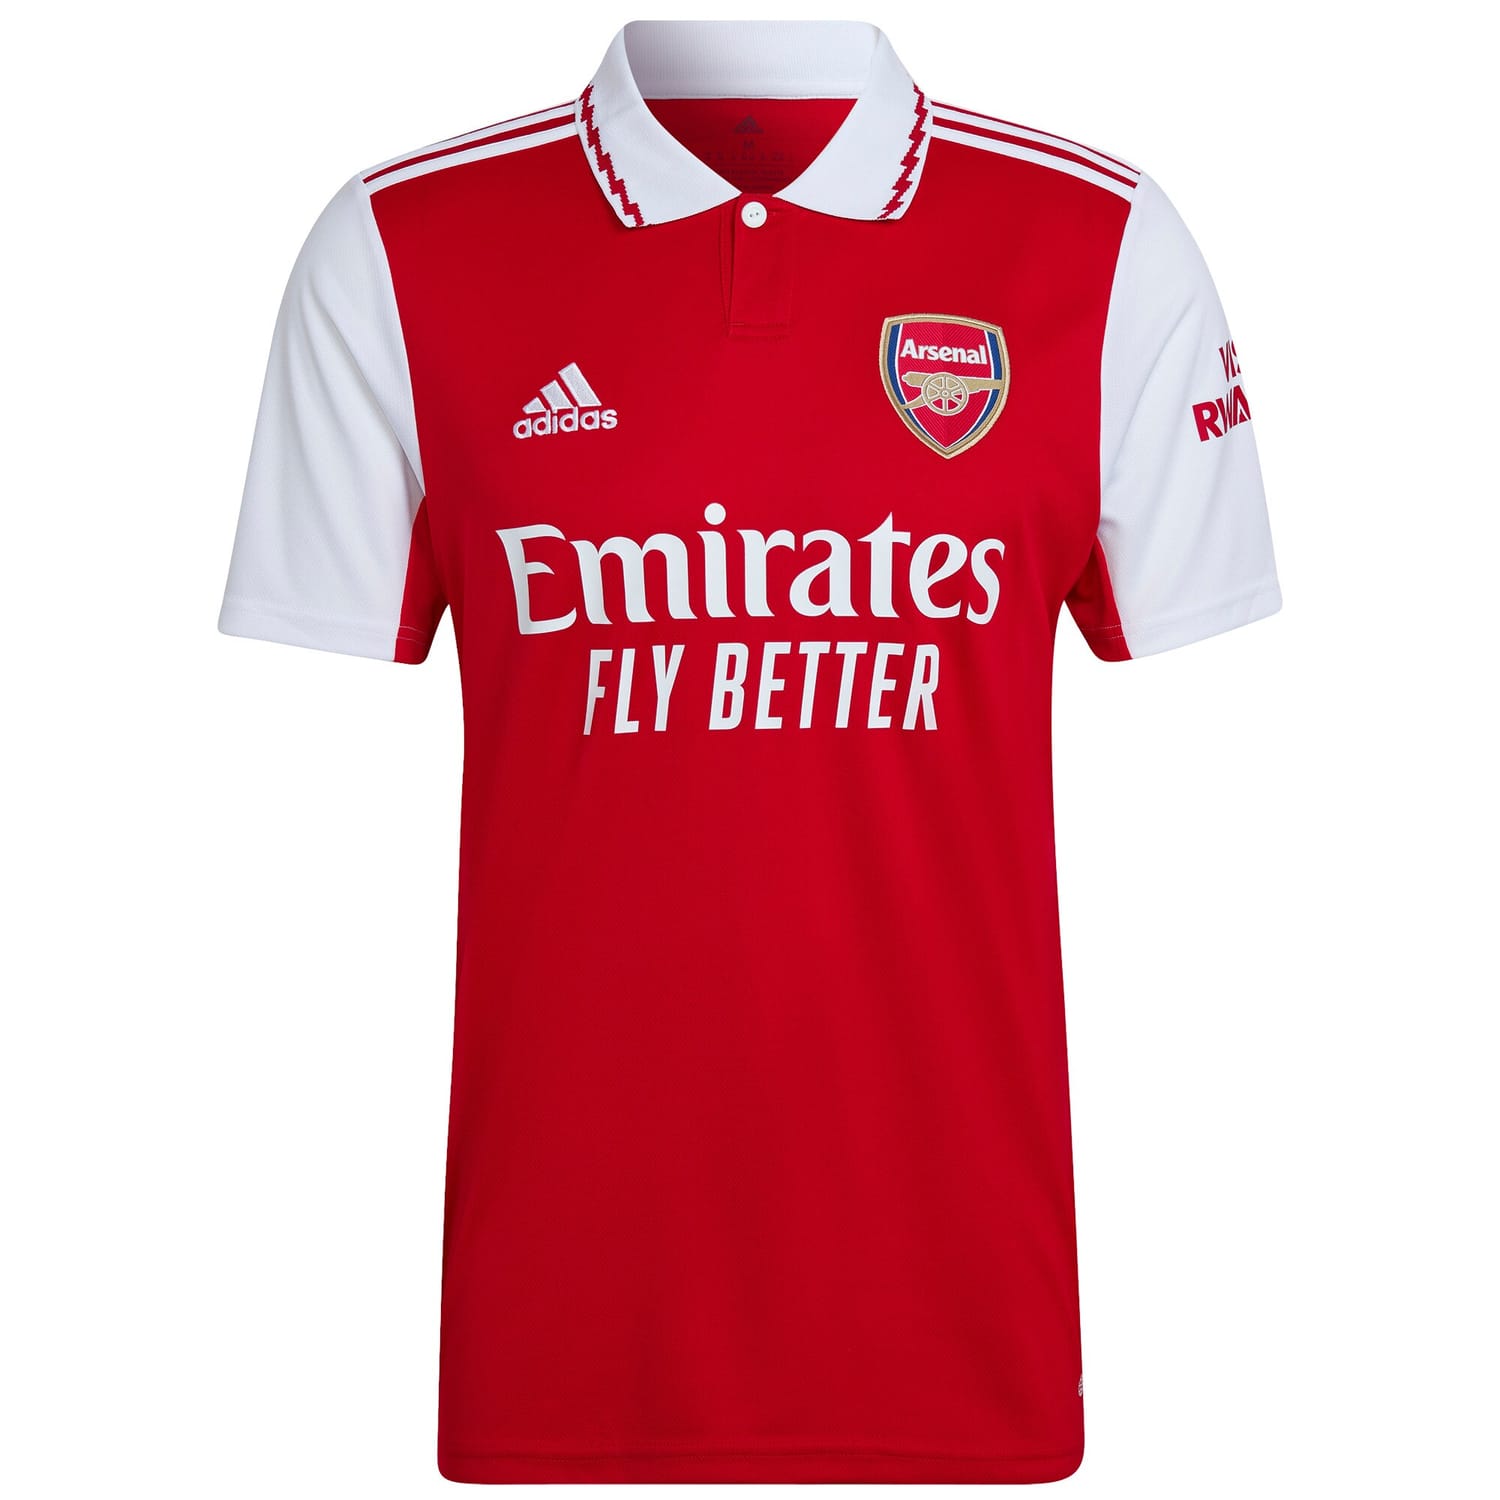 Premier League Arsenal Home Jersey Shirt 2022-23 player Vieira 21 printing for Men